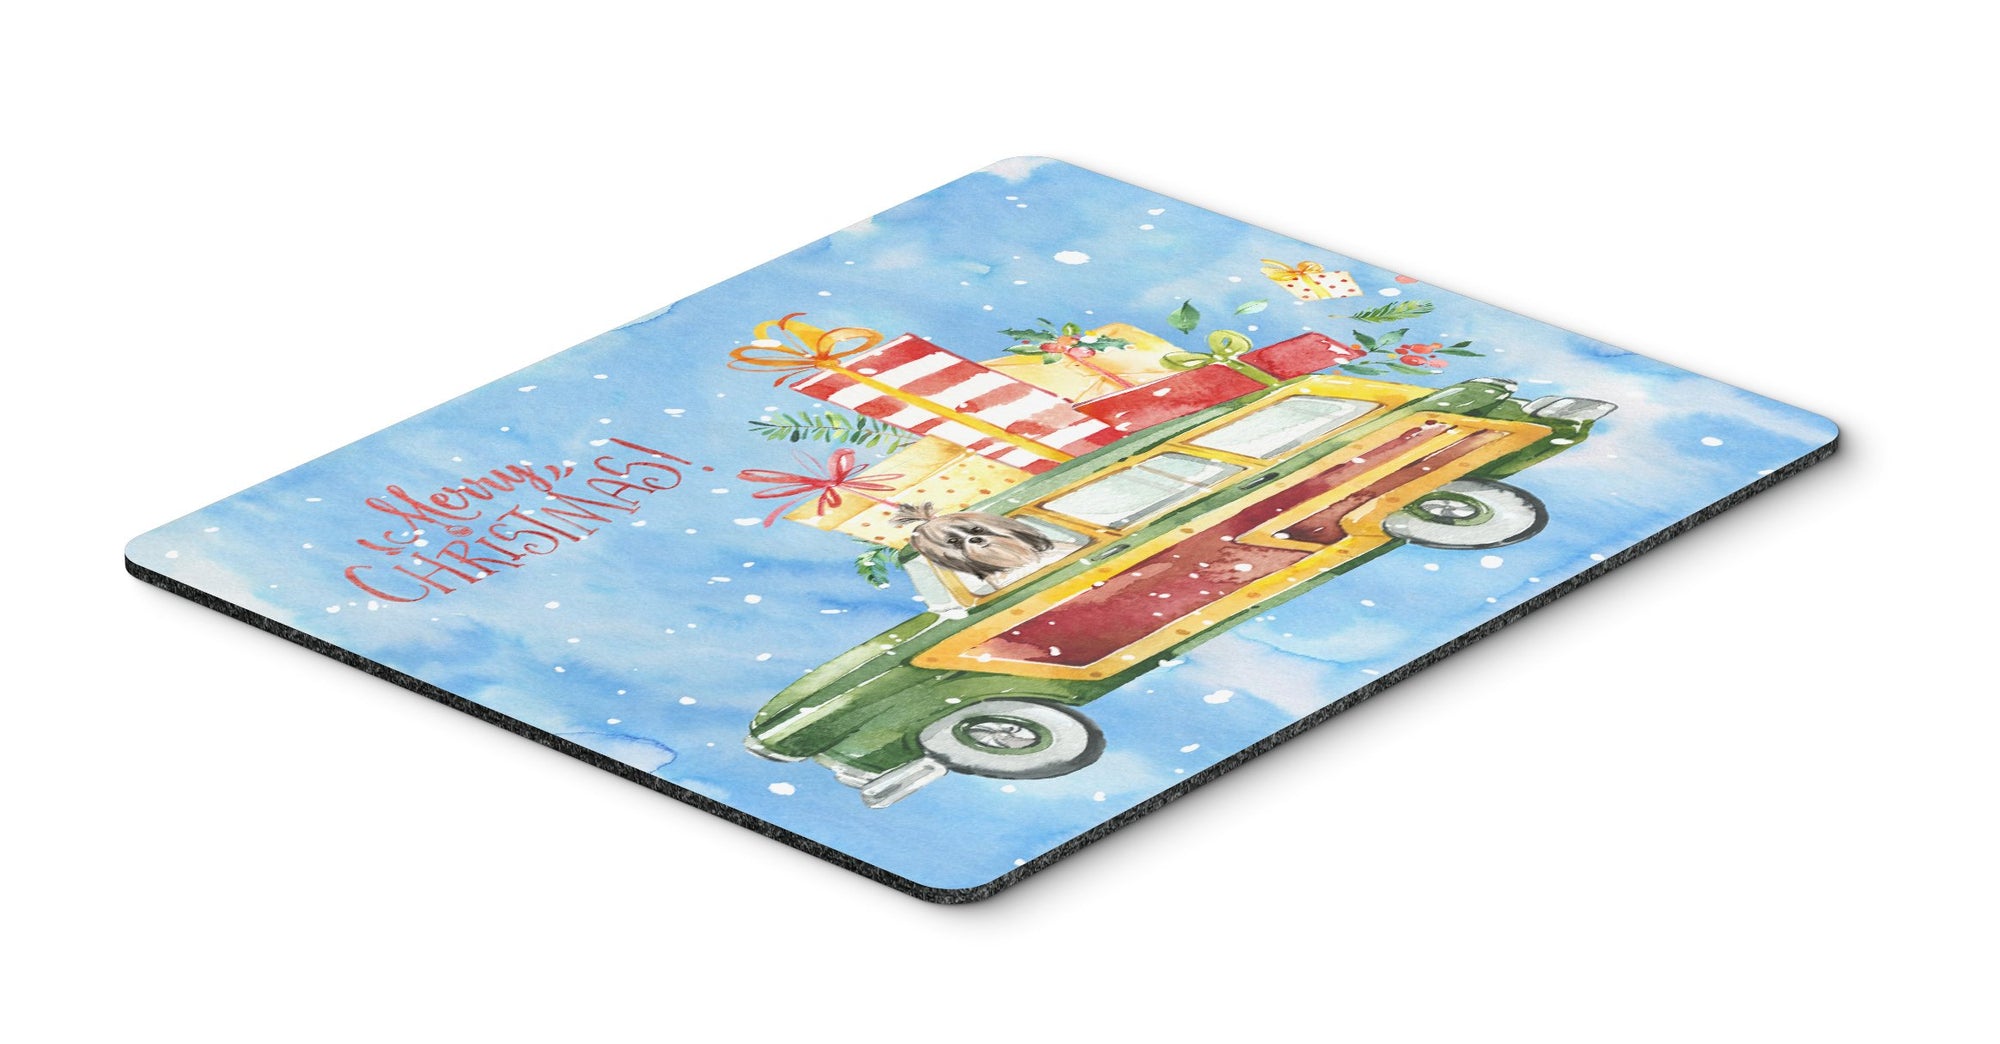 Merry Christmas Shih Tzu Mouse Pad, Hot Pad or Trivet CK2422MP by Caroline's Treasures